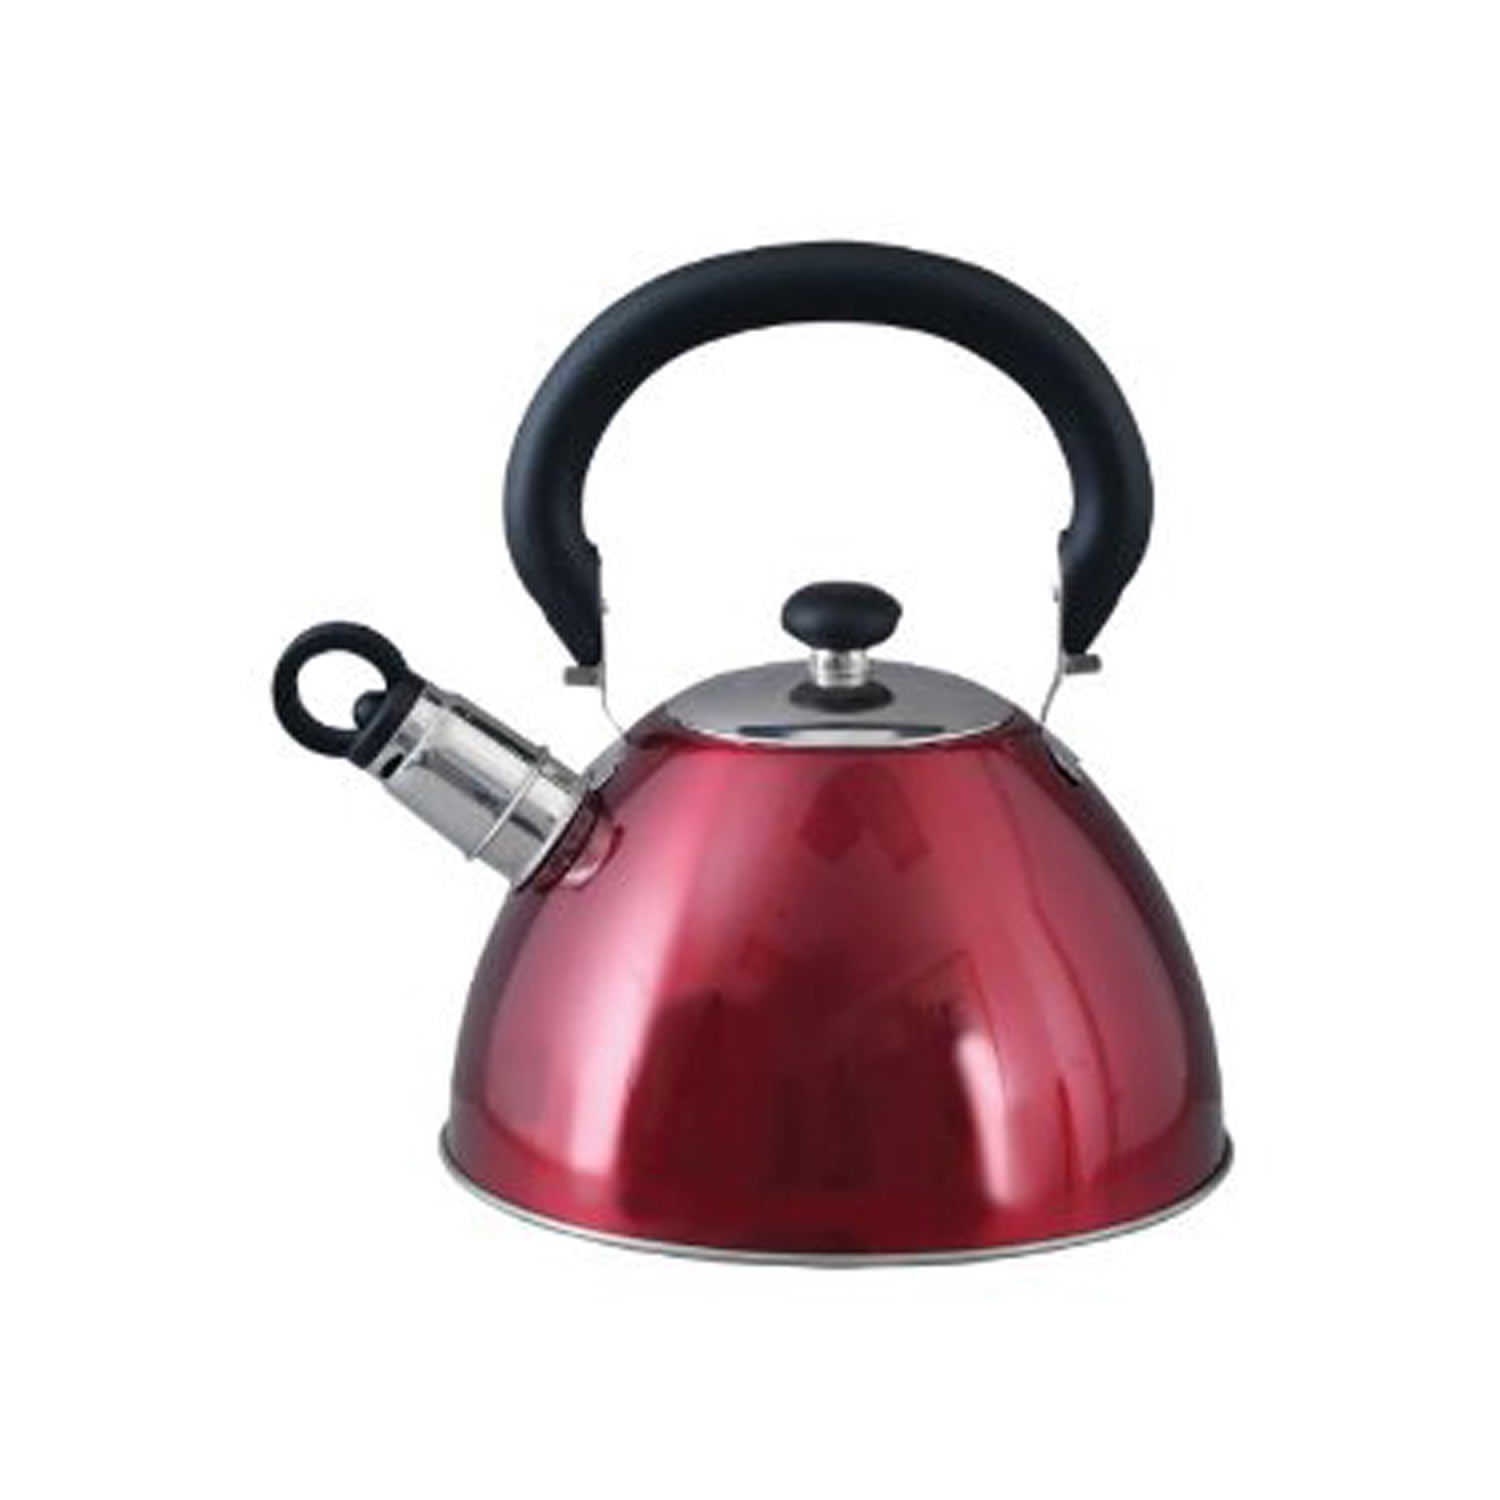 Чайник со свистком. Karlson.. Tea kettle Whistling Type. Чайник красный с мужчиной. Чайник 1,8-2 литр срср1. Kettle 1a